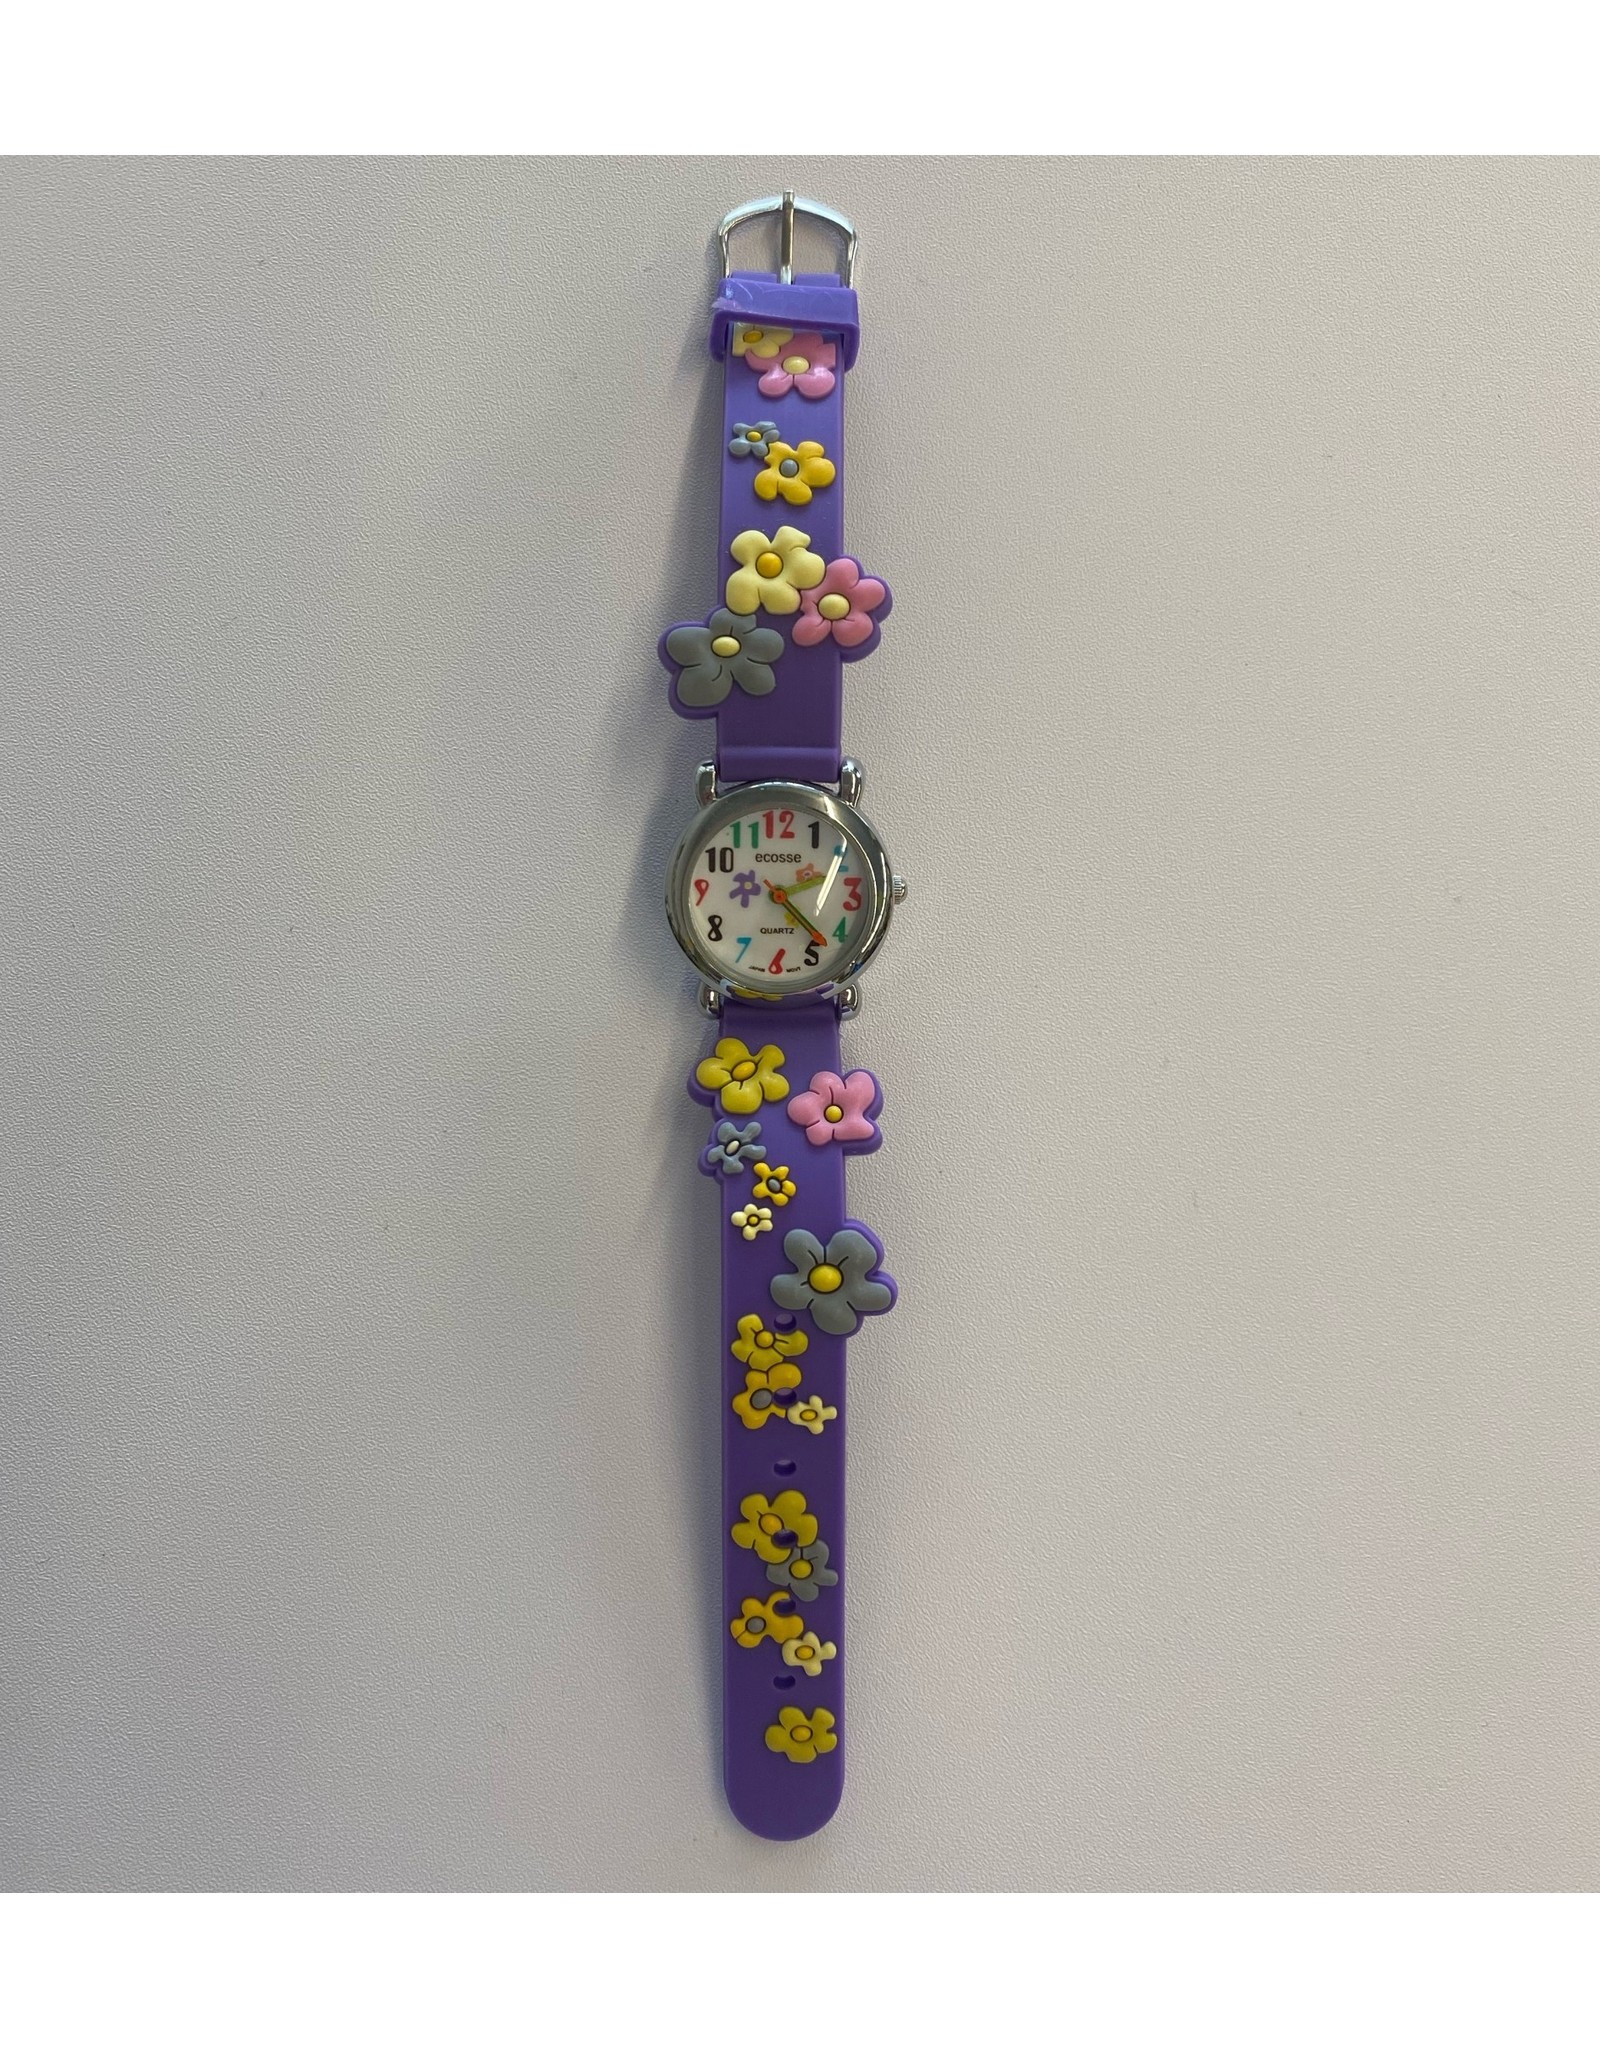 Children's Female Watch Purple with Yellow Flowers